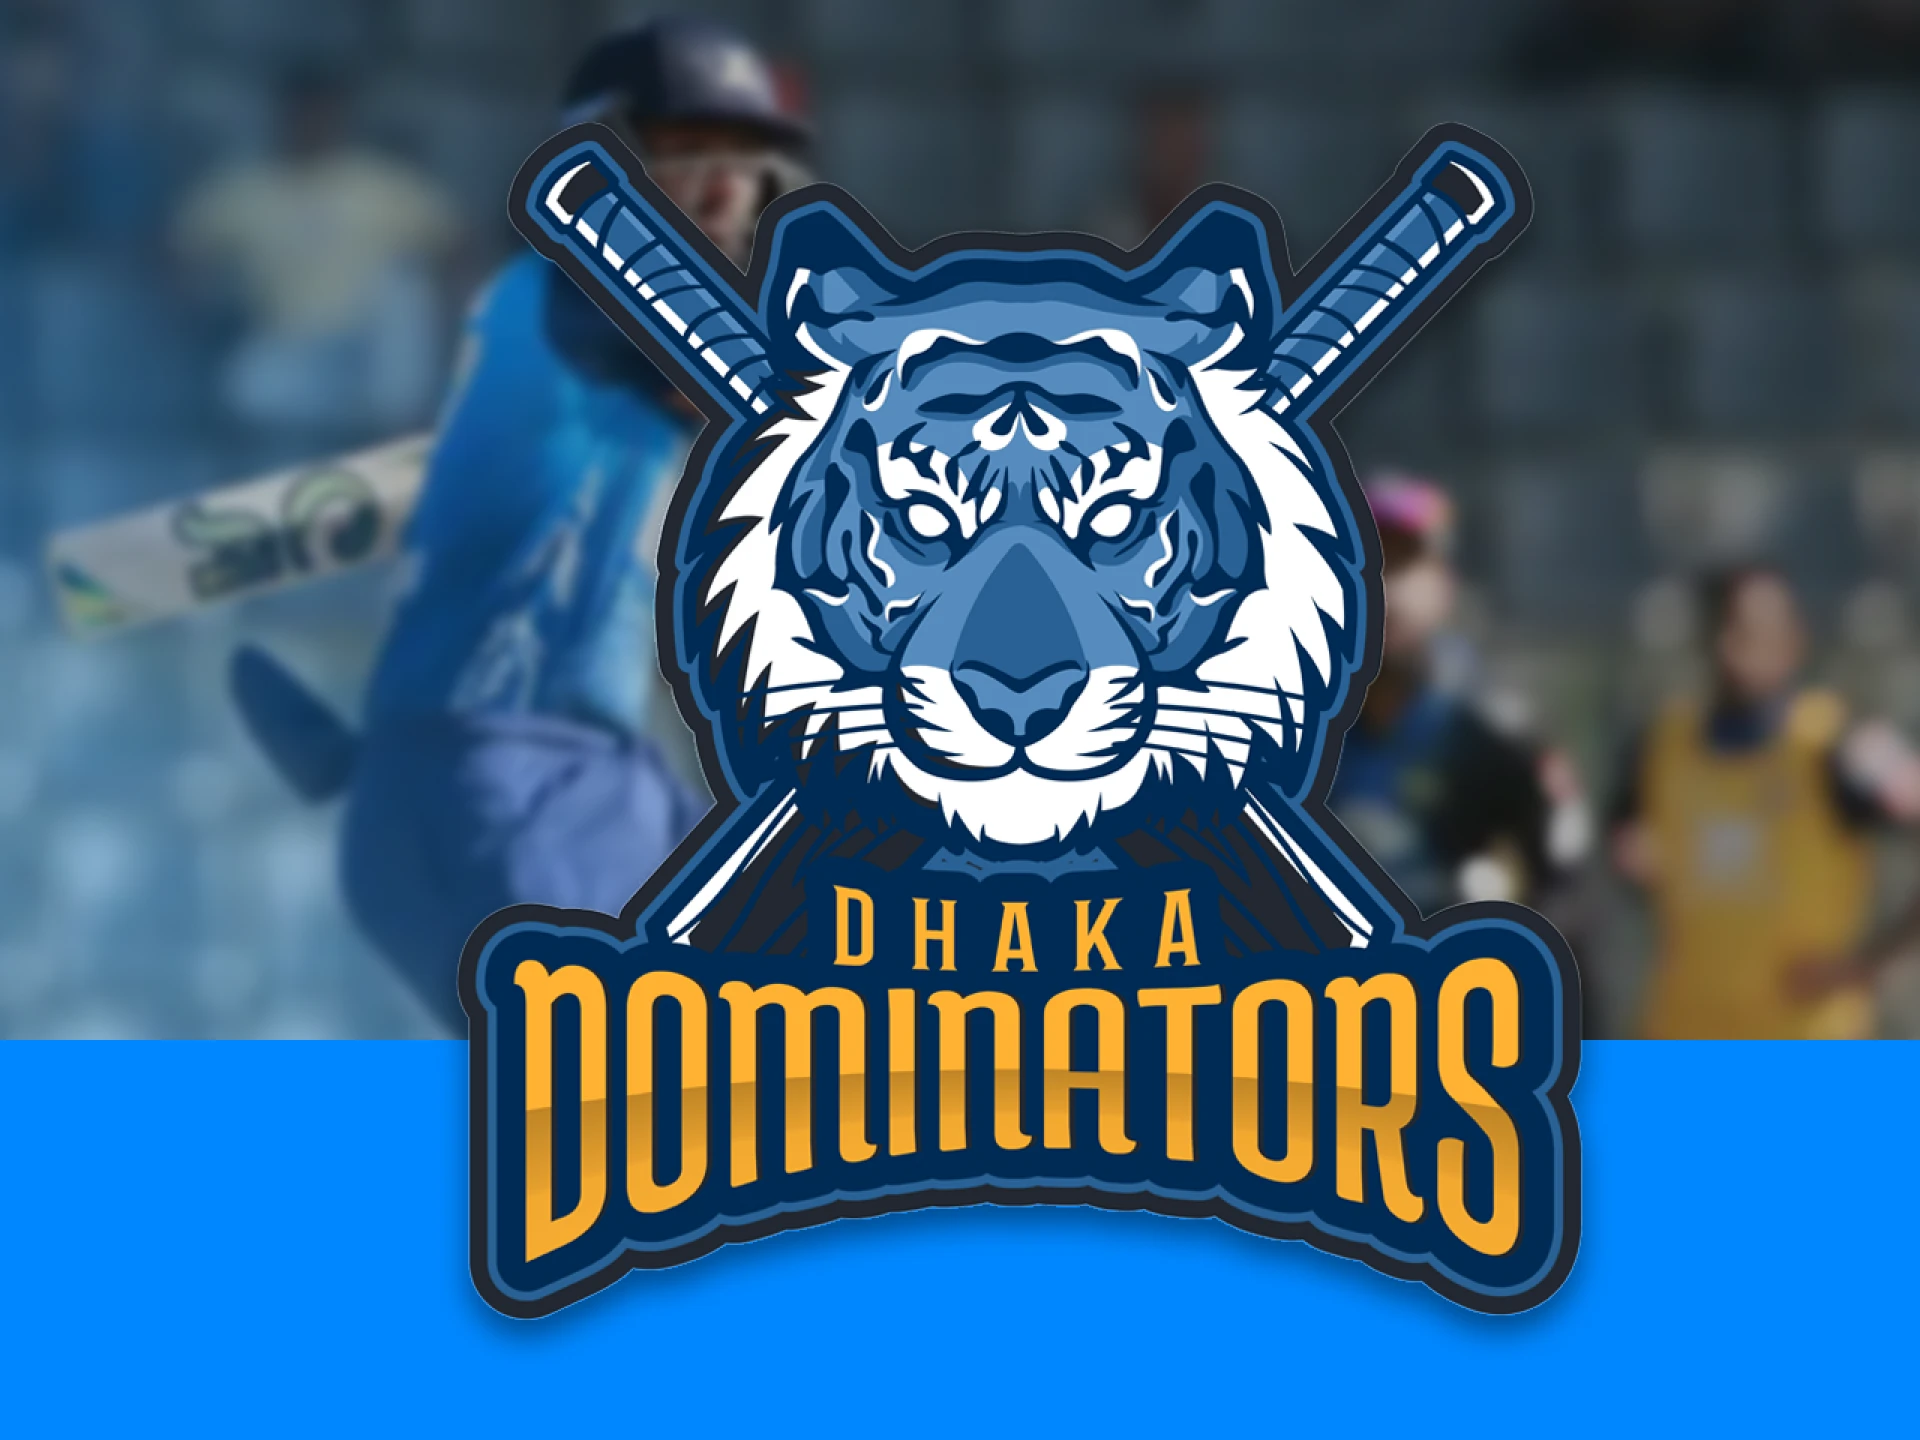 The Dhaka Dominators has already been winners of the BPL.